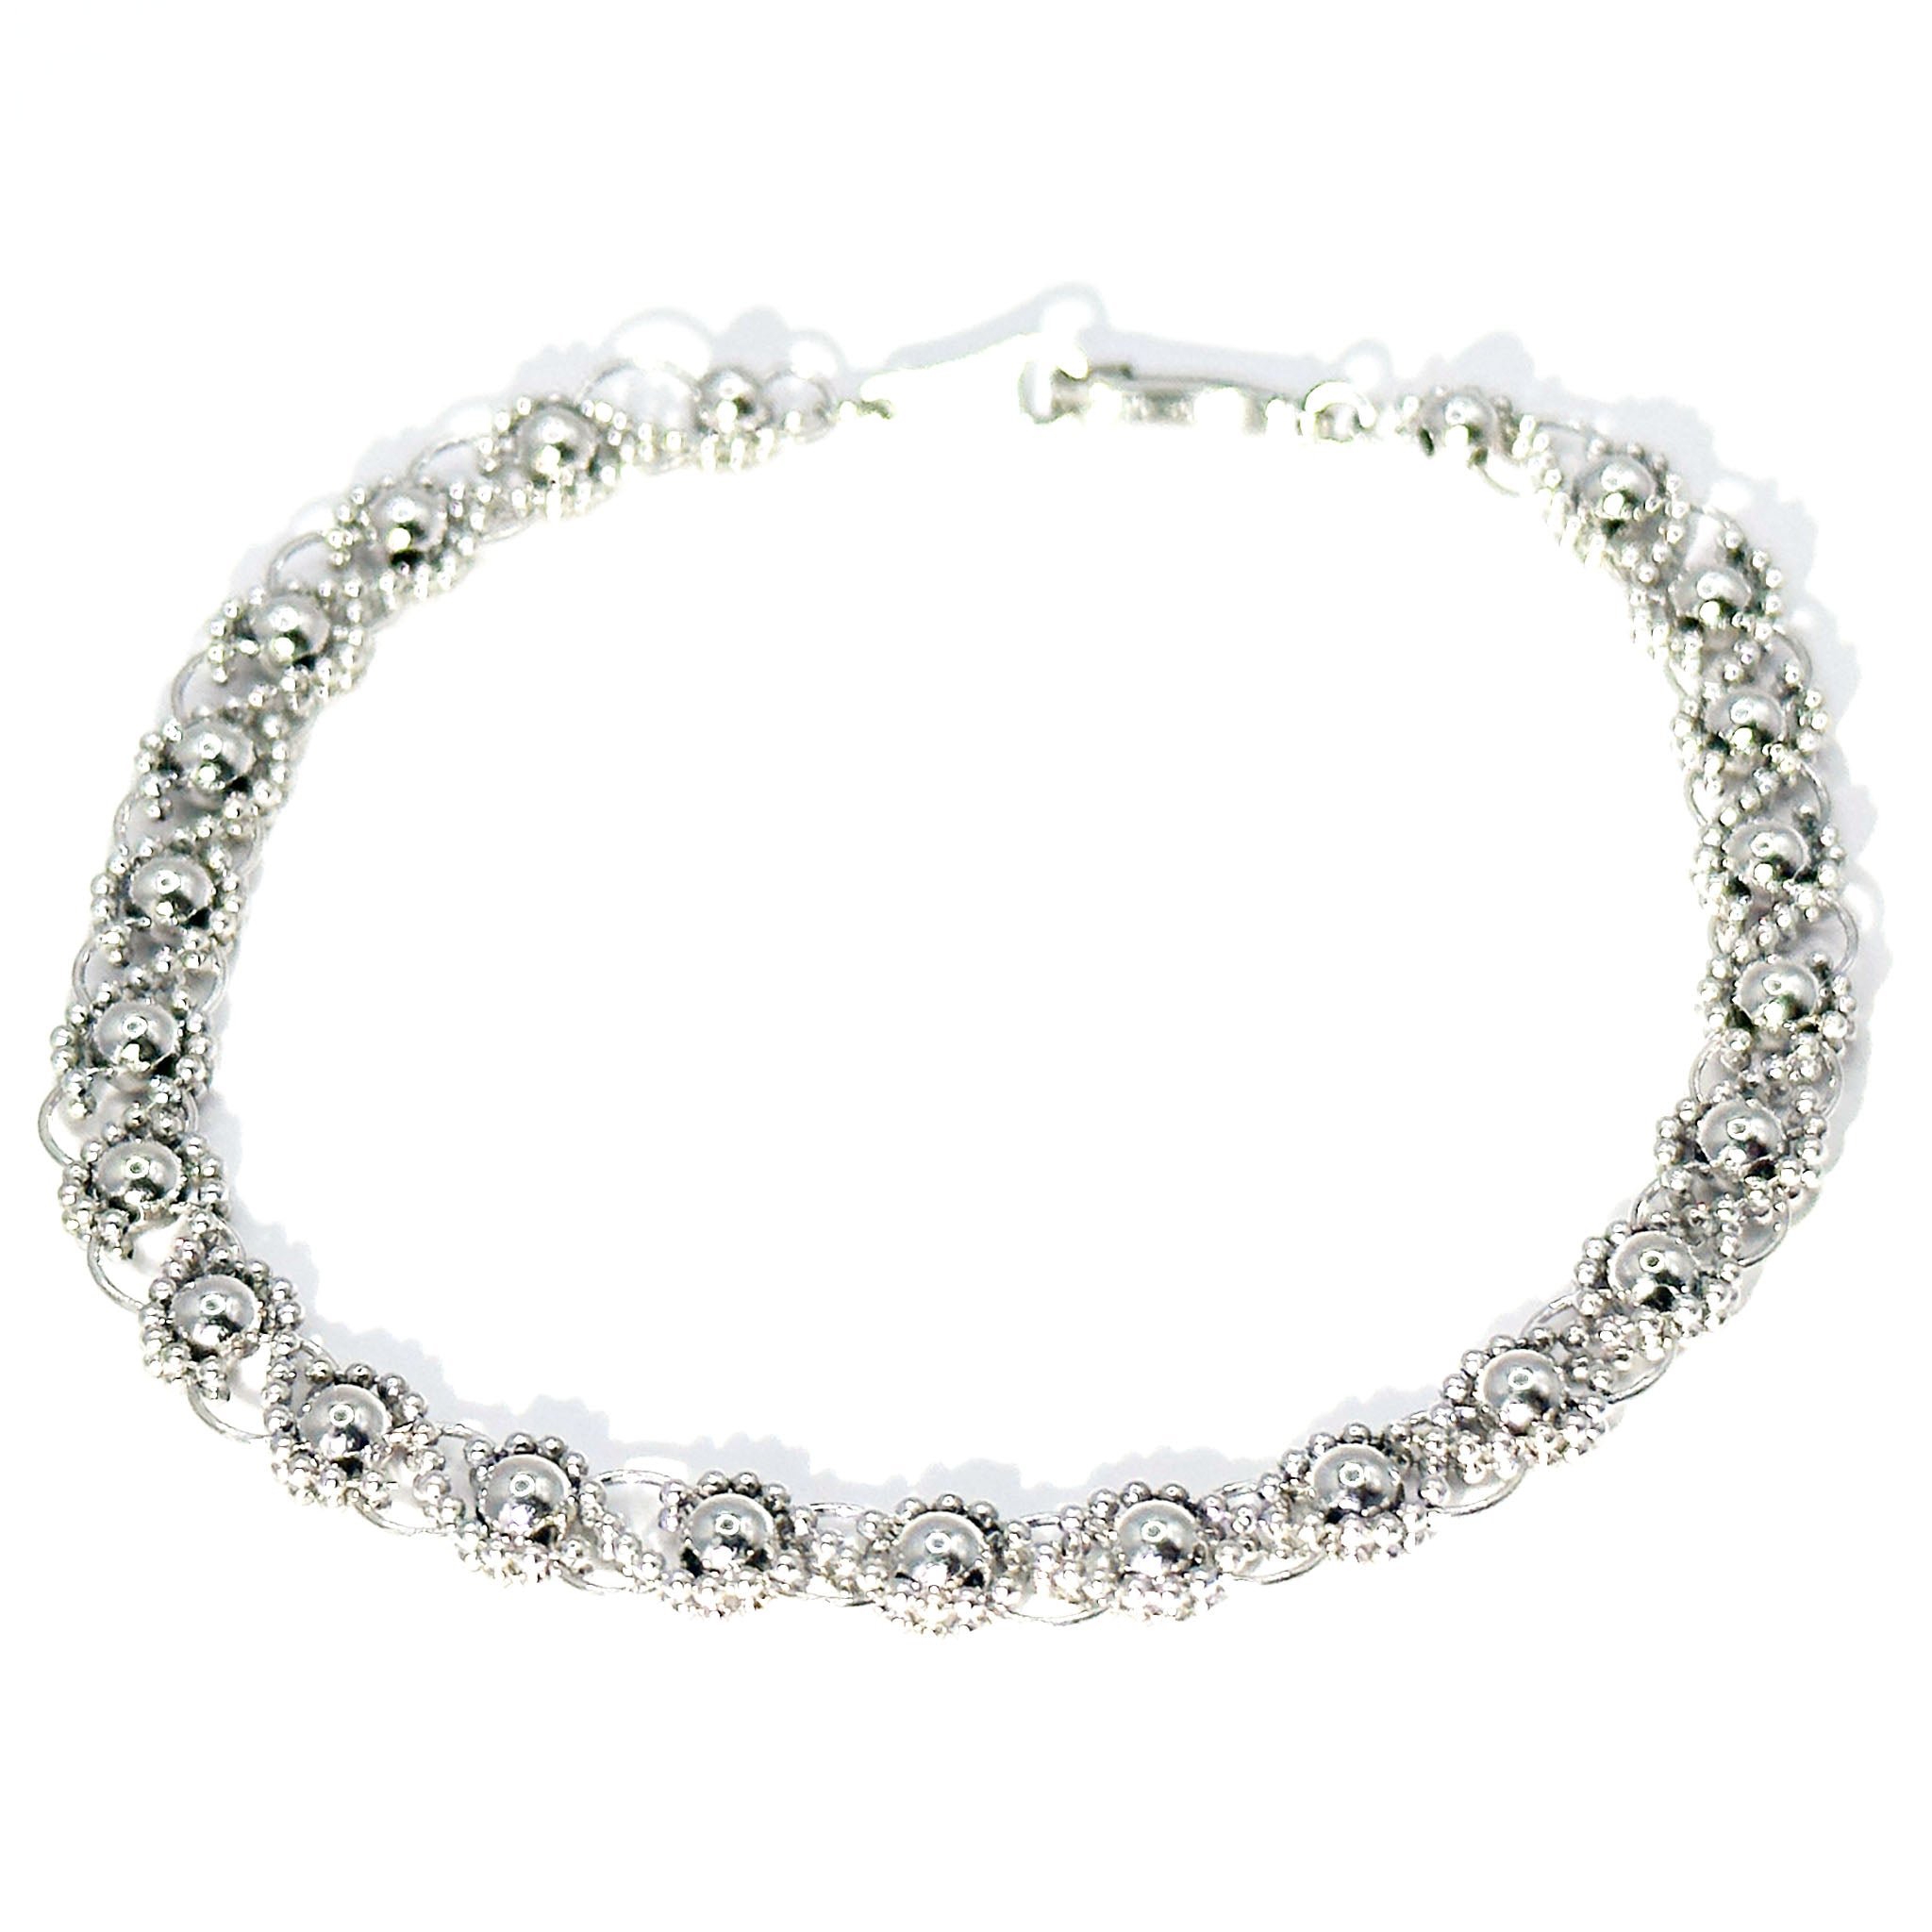 $3800 Platinum .950 Women's Filigree Antique Design 7 Inch Link Bracelet - Esmeralda Jewels 